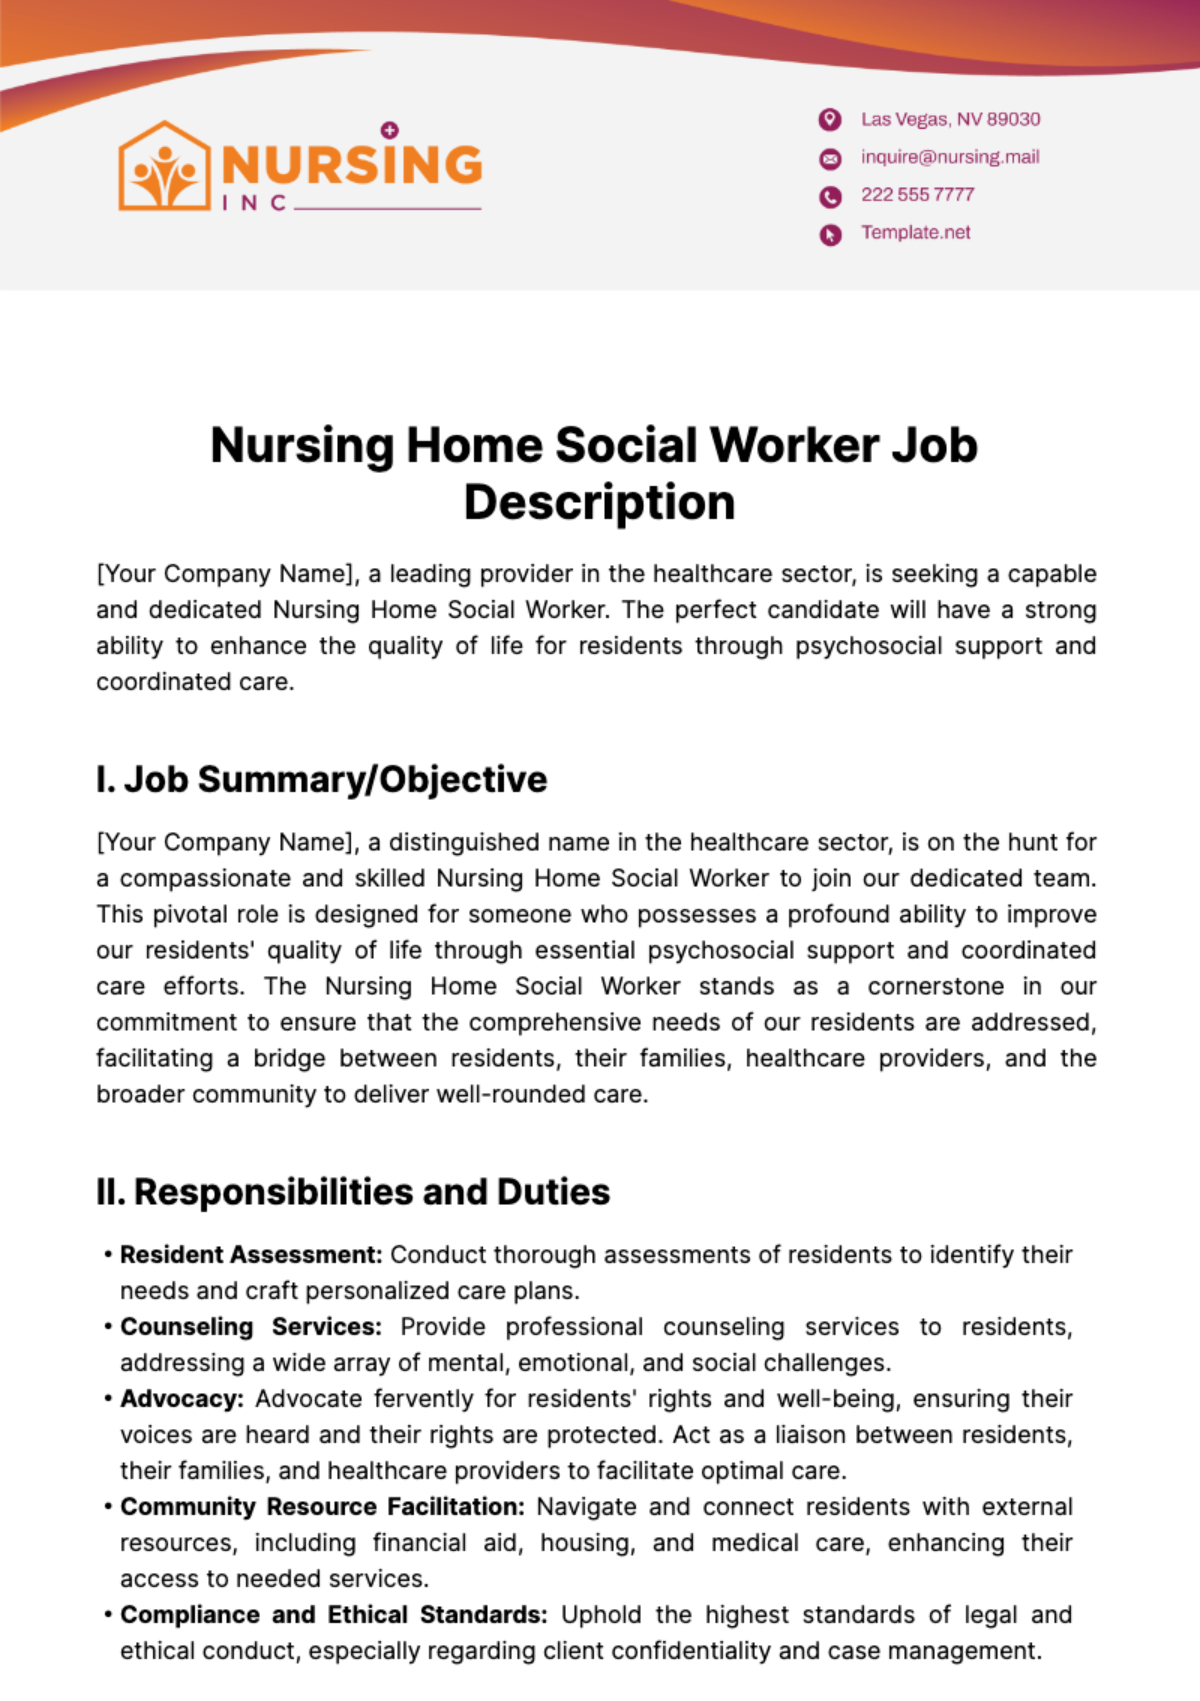 Free Nursing Home Social Worker Job Description Template